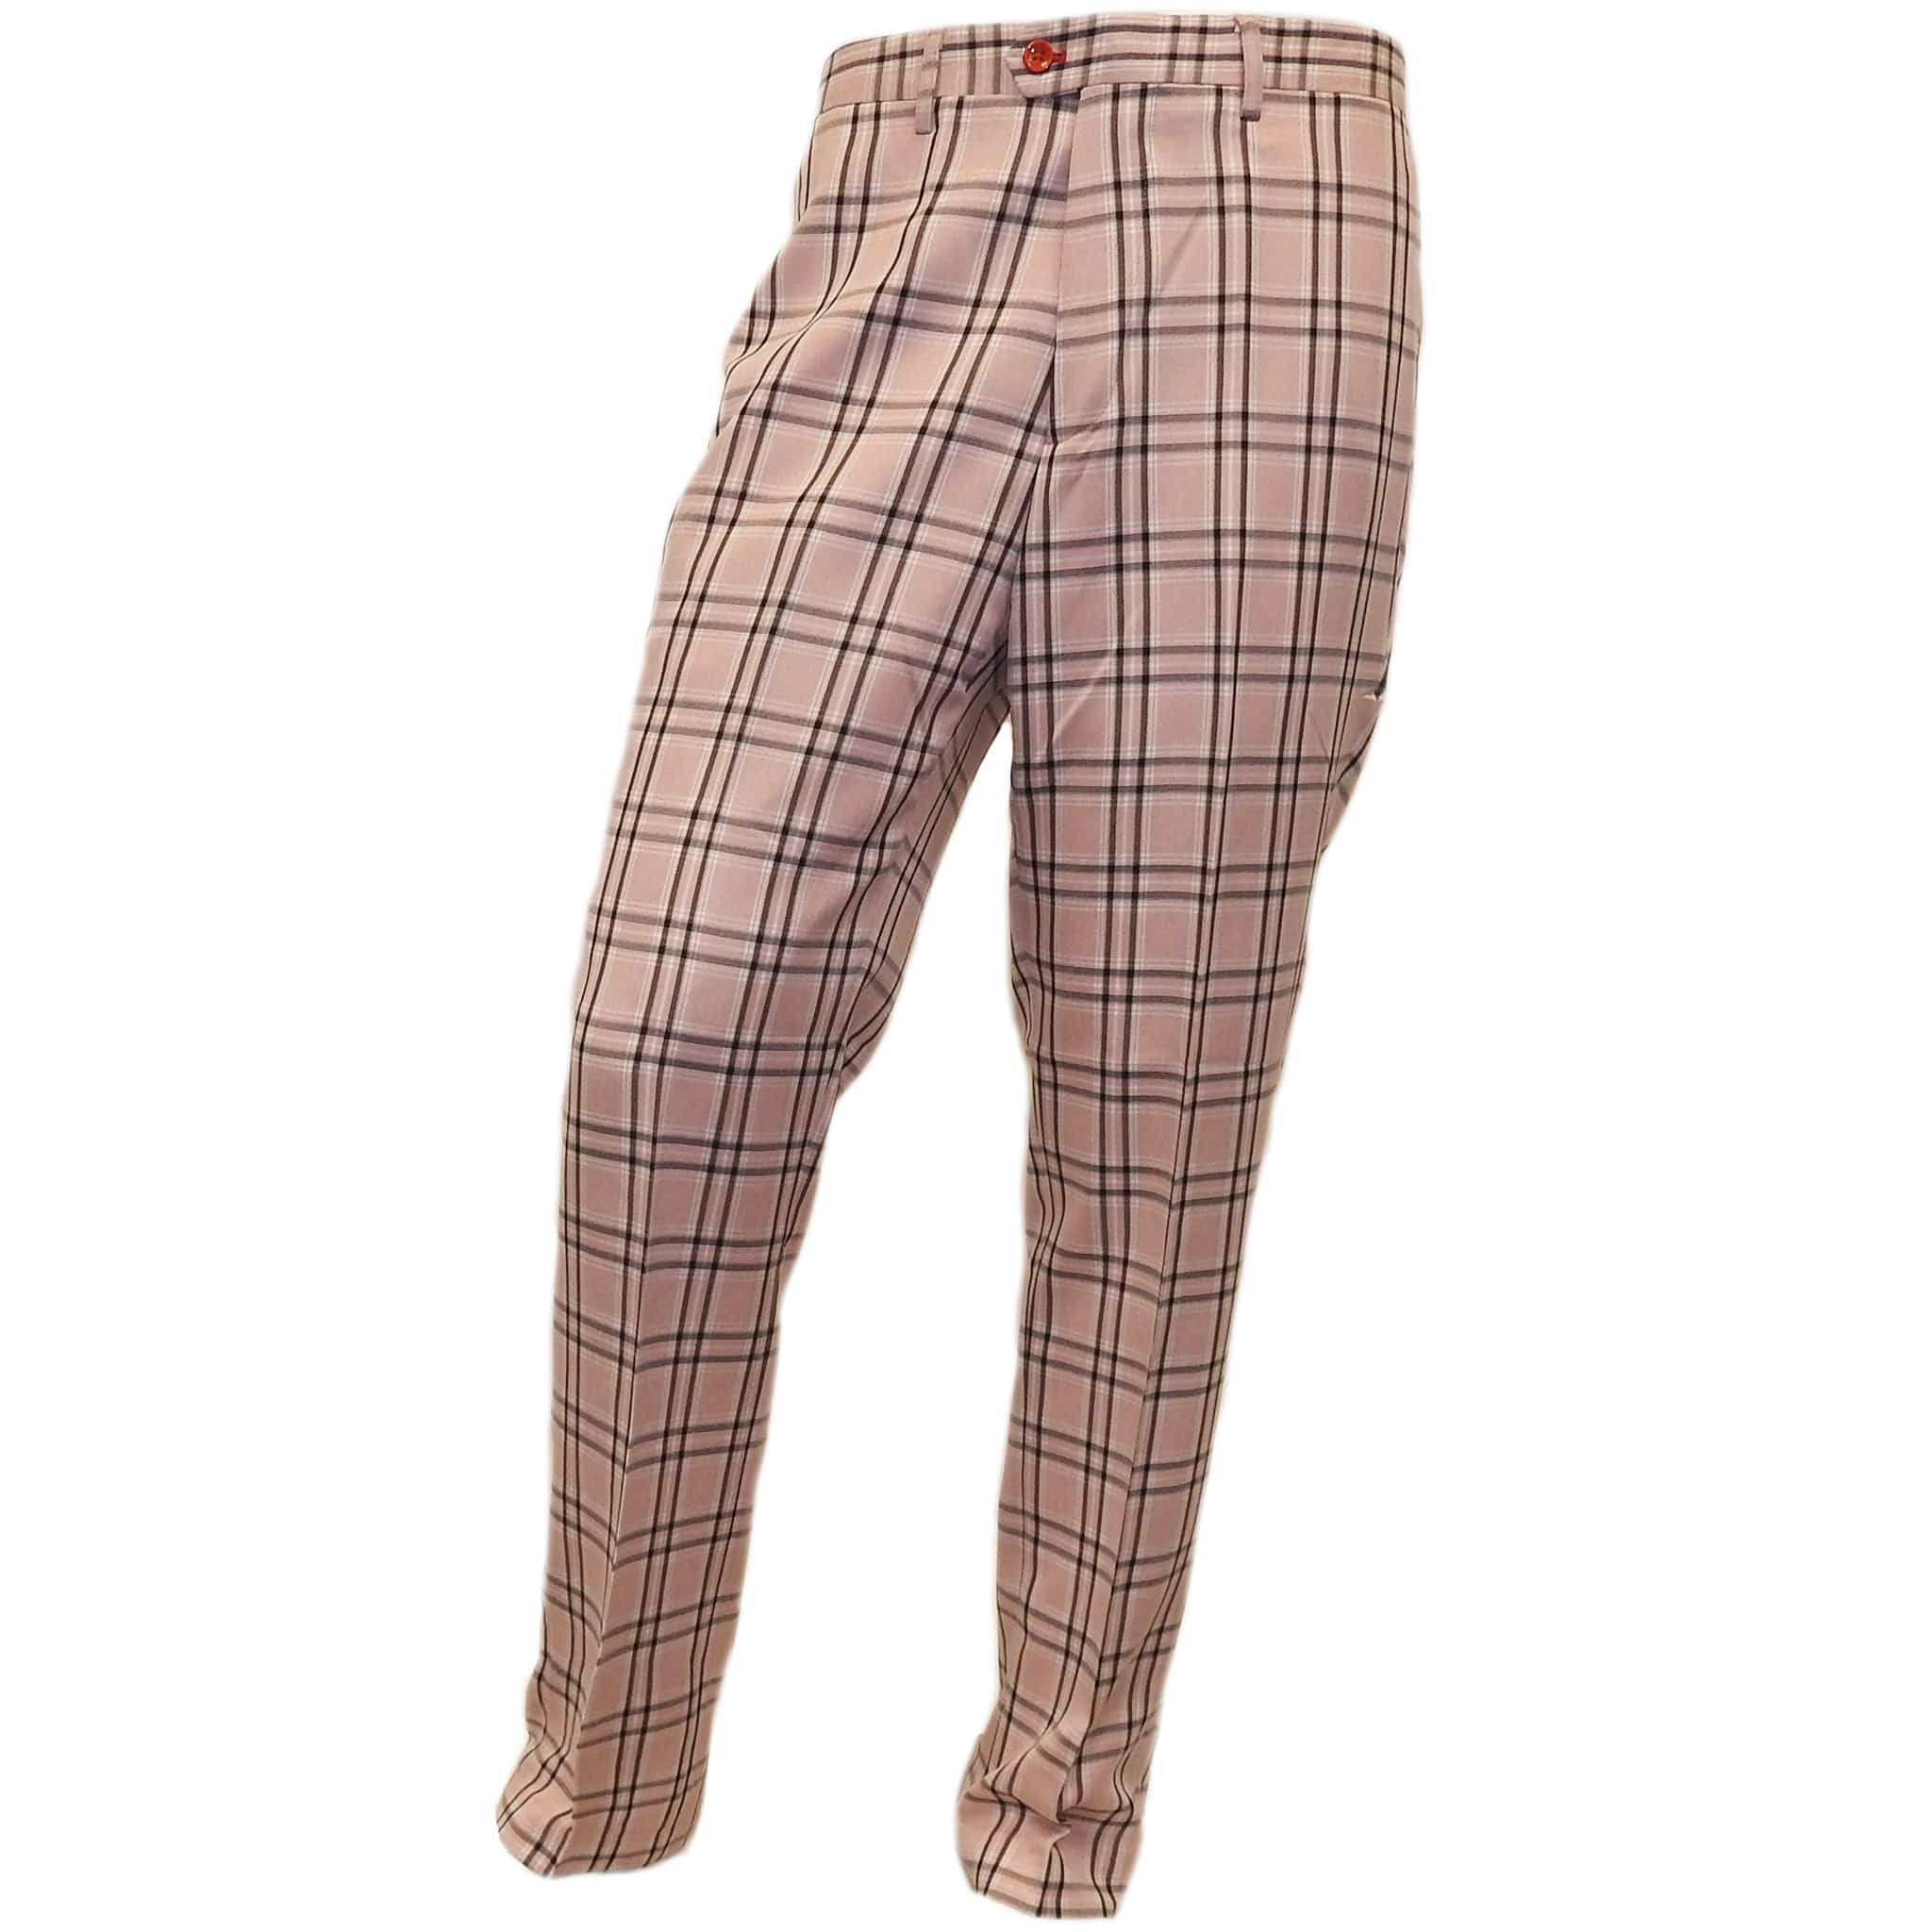 Maruchan Women's and Women's Plus Graphic Sleep Pants, Size S-3X 